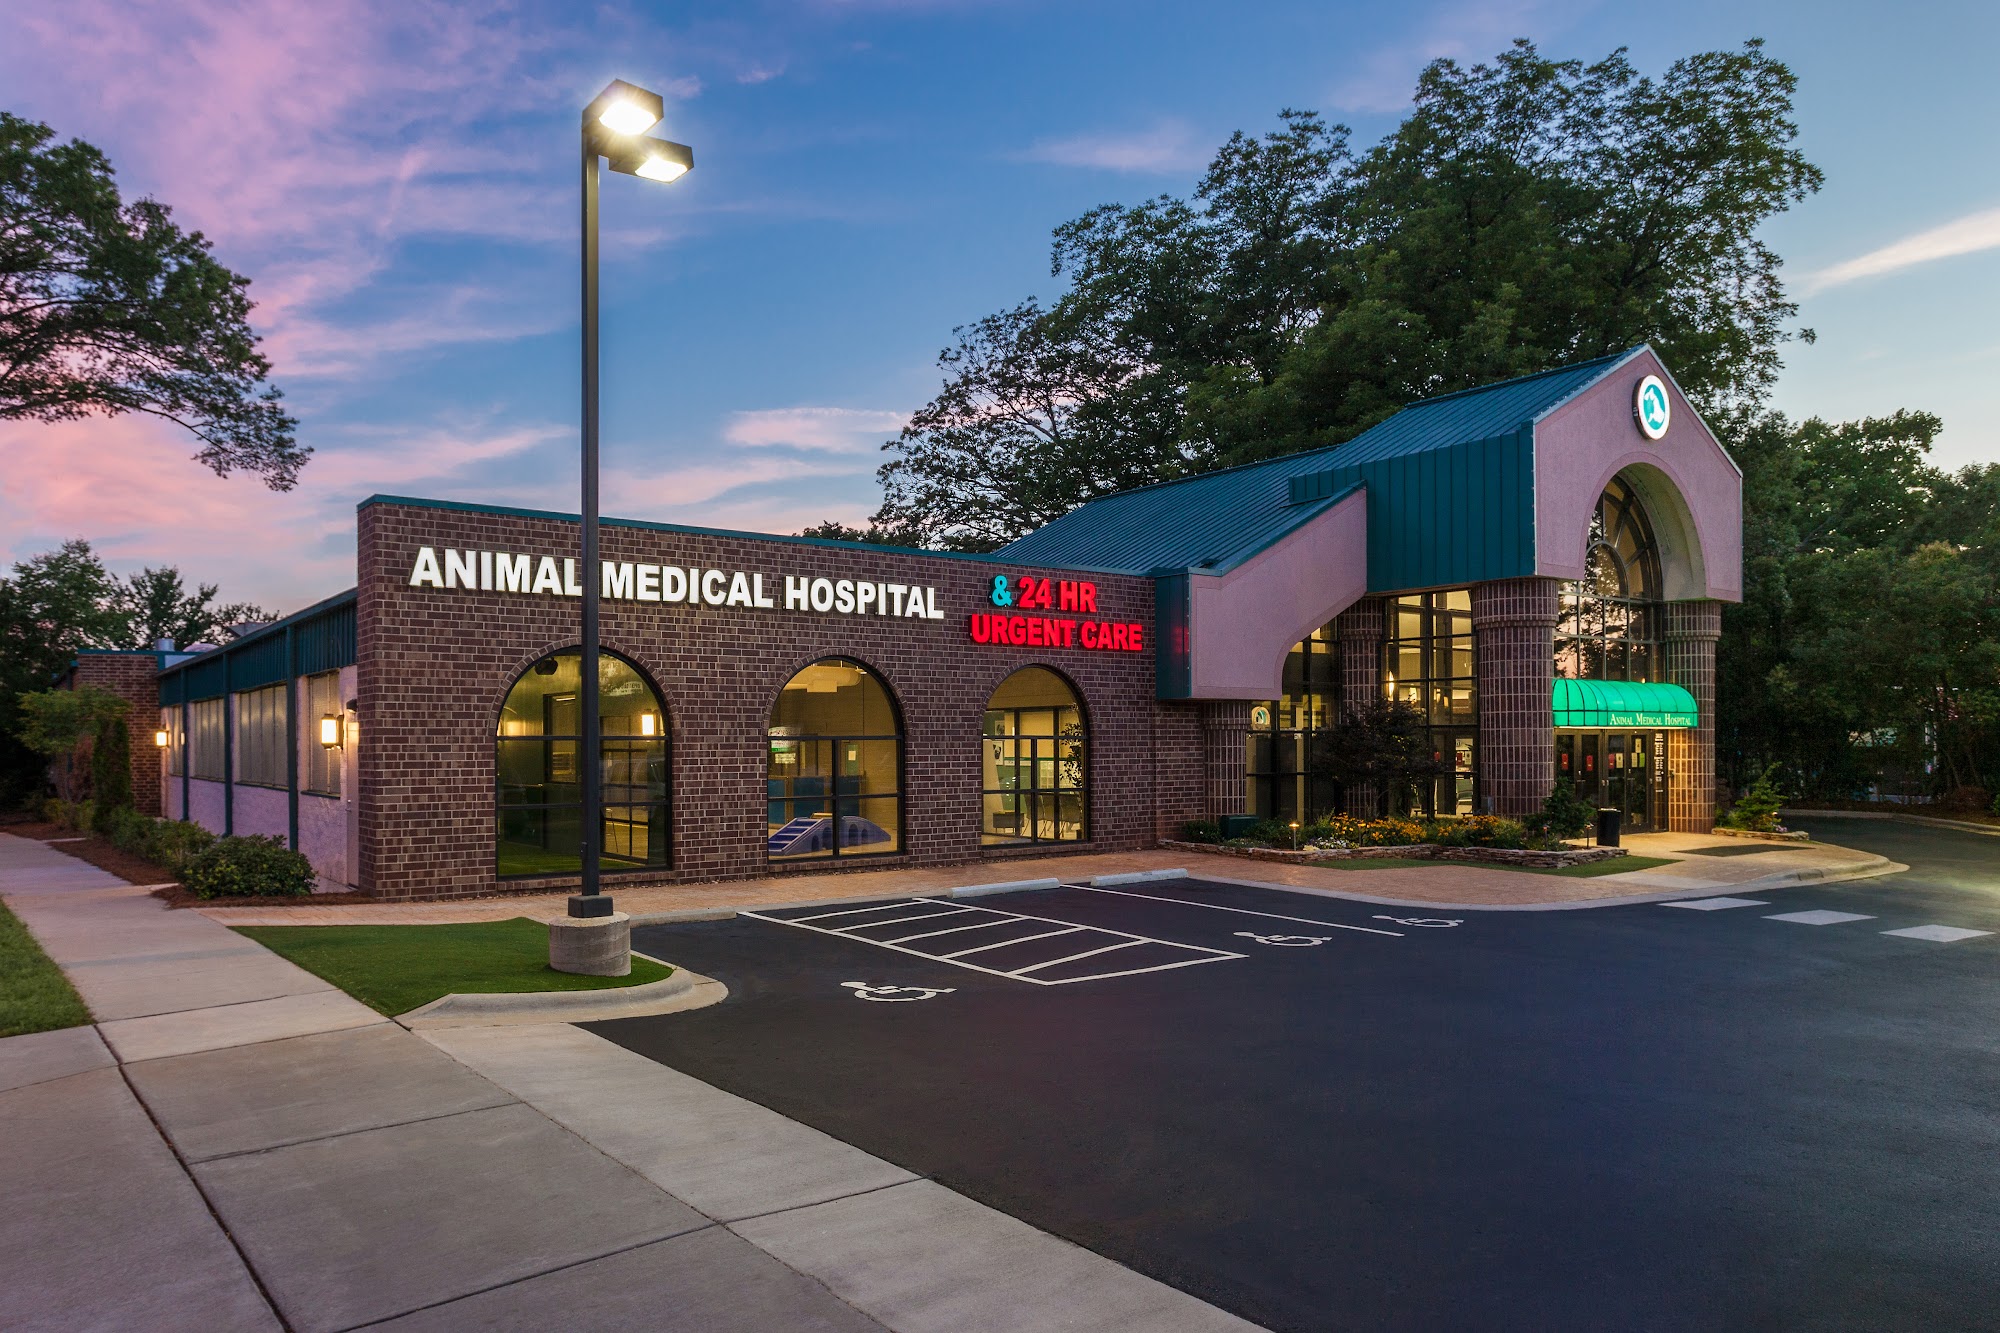 Animal Medical Hospital & 24 Hour Urgent Care